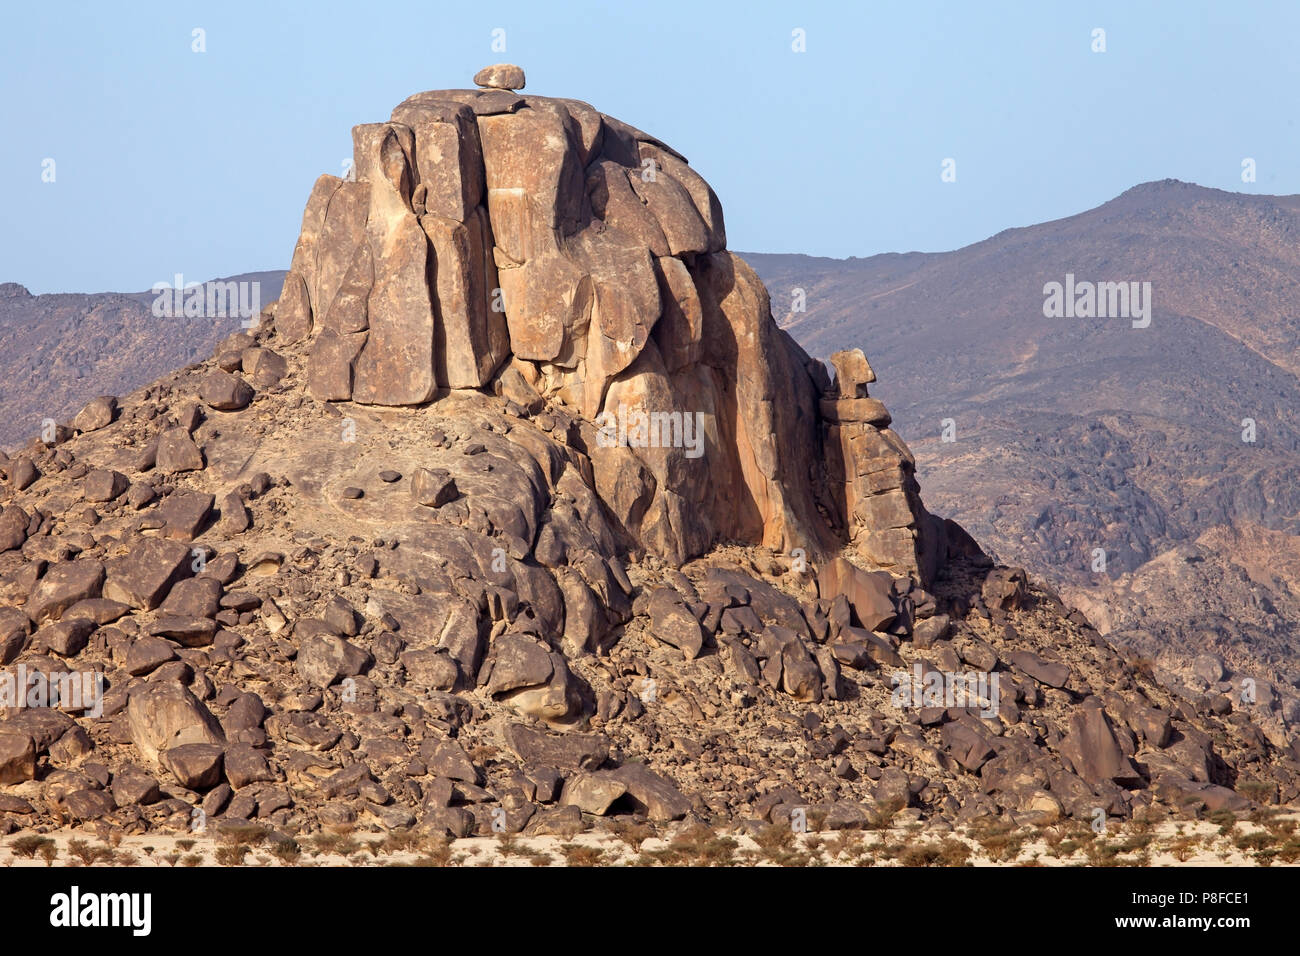 Mountain landscape in the desert, Saudi Arabia Stock Photo